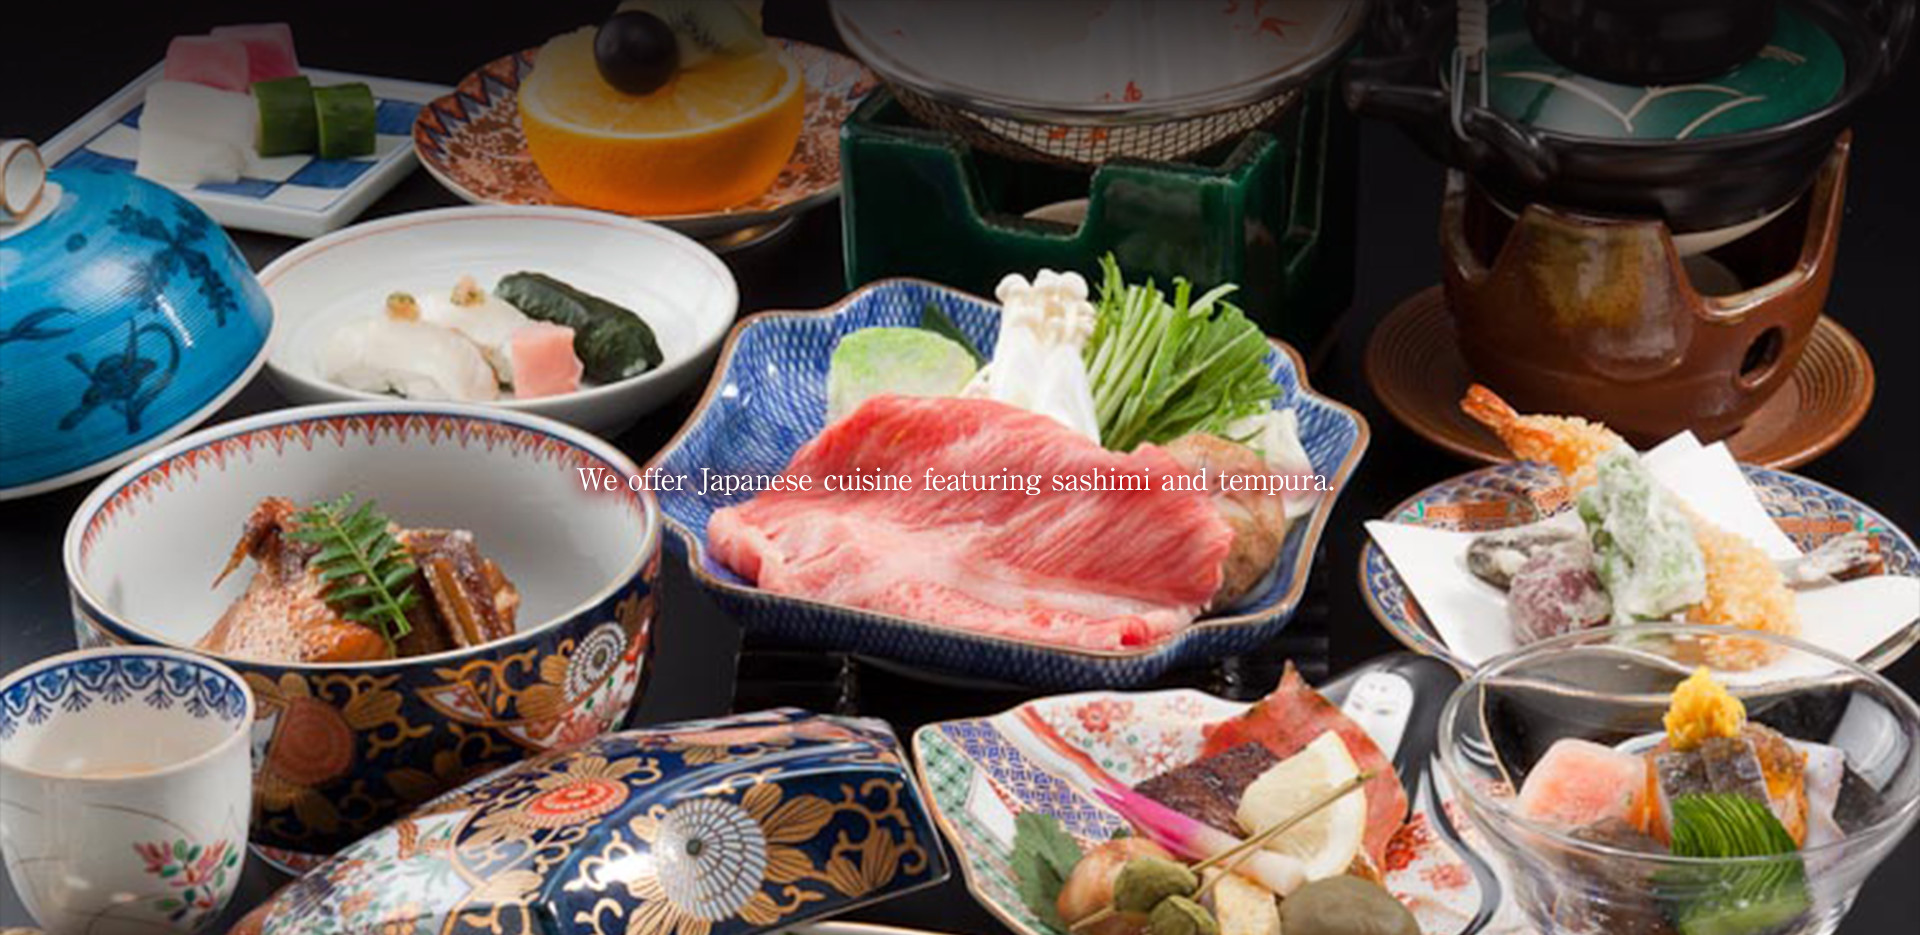 We offer Japanese cuisine featuring sashimi and tempura.”